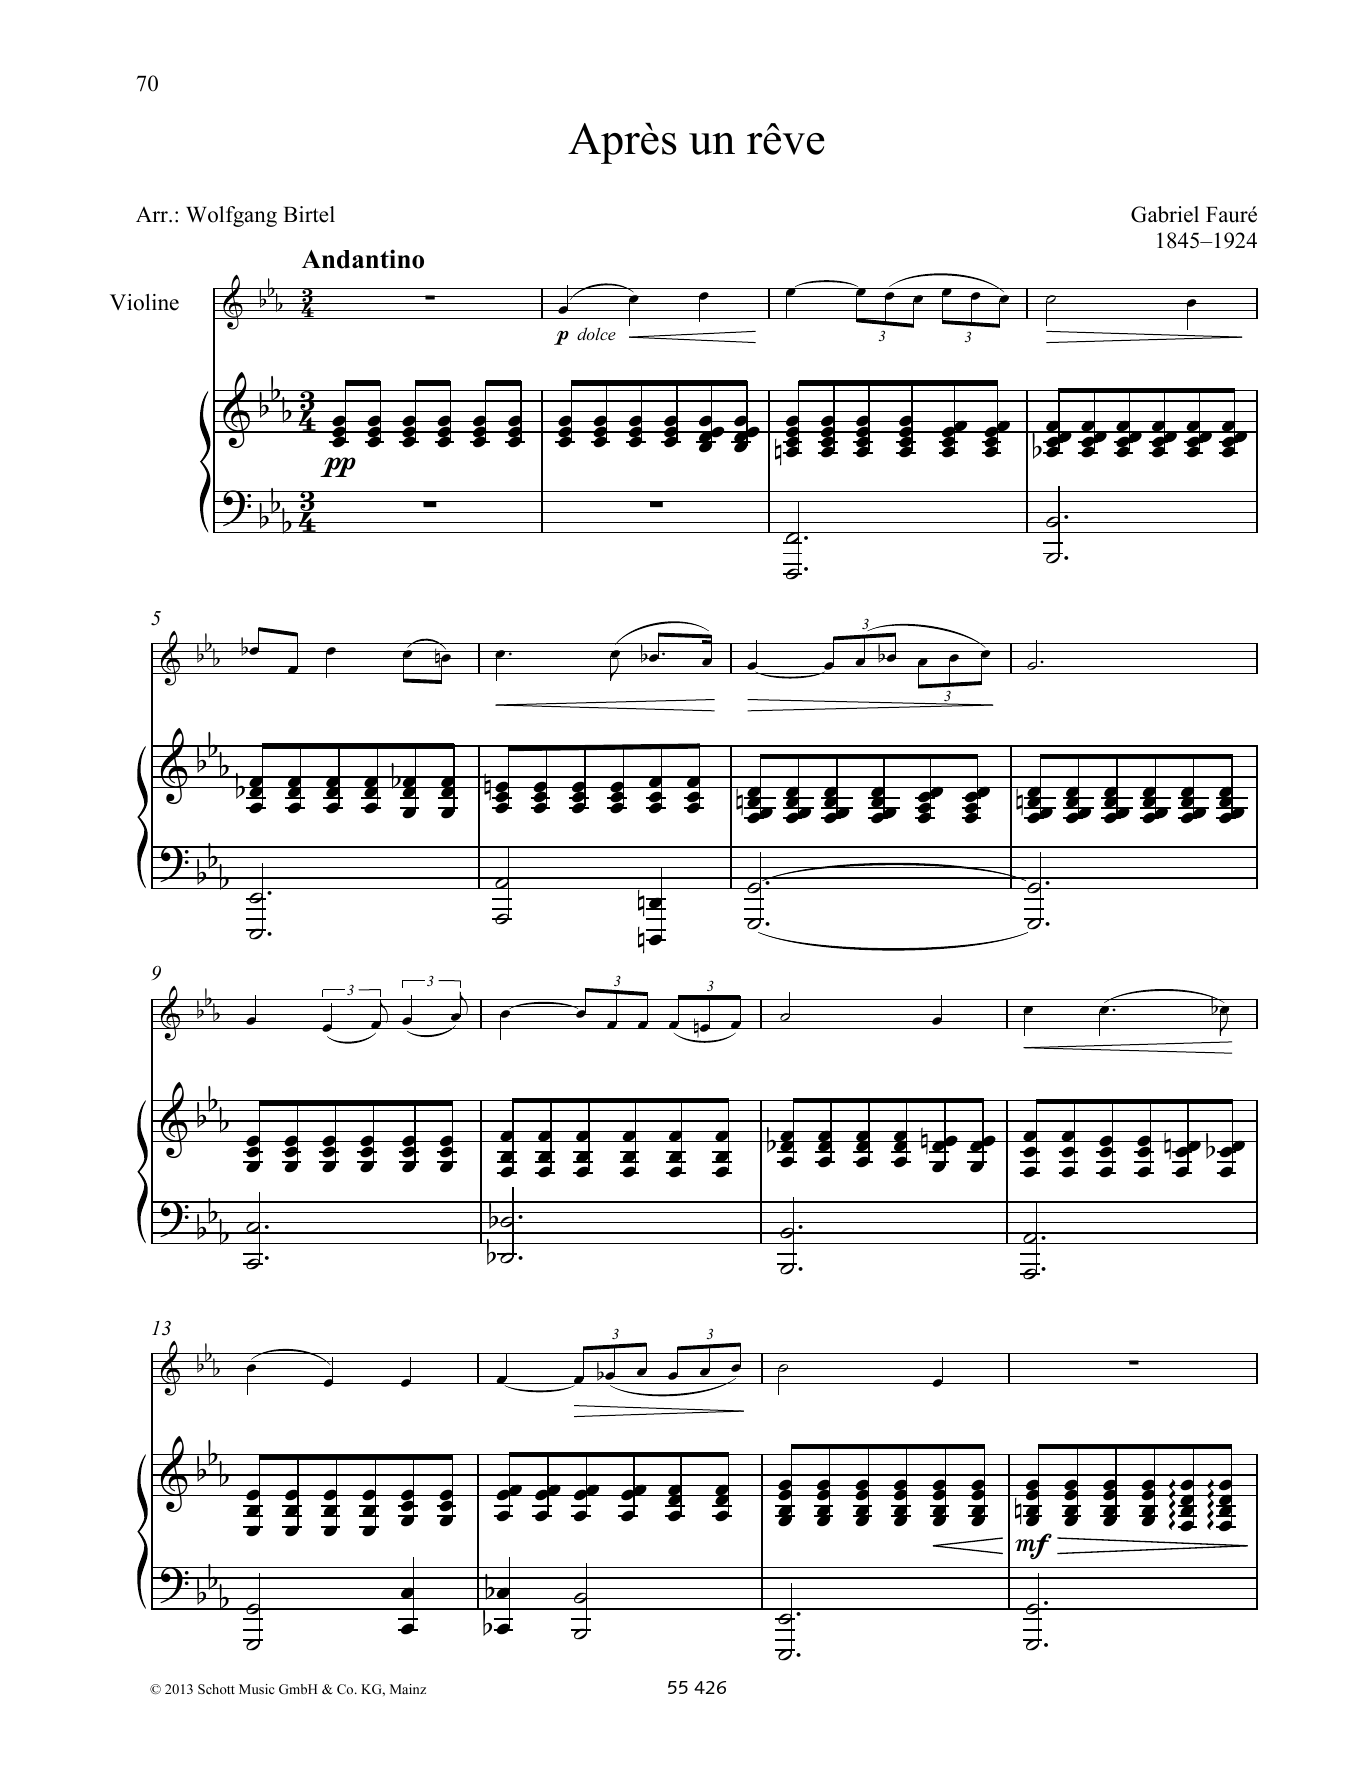 Gabriel Fauré Après un rêve Sheet Music Notes & Chords for String Solo - Download or Print PDF